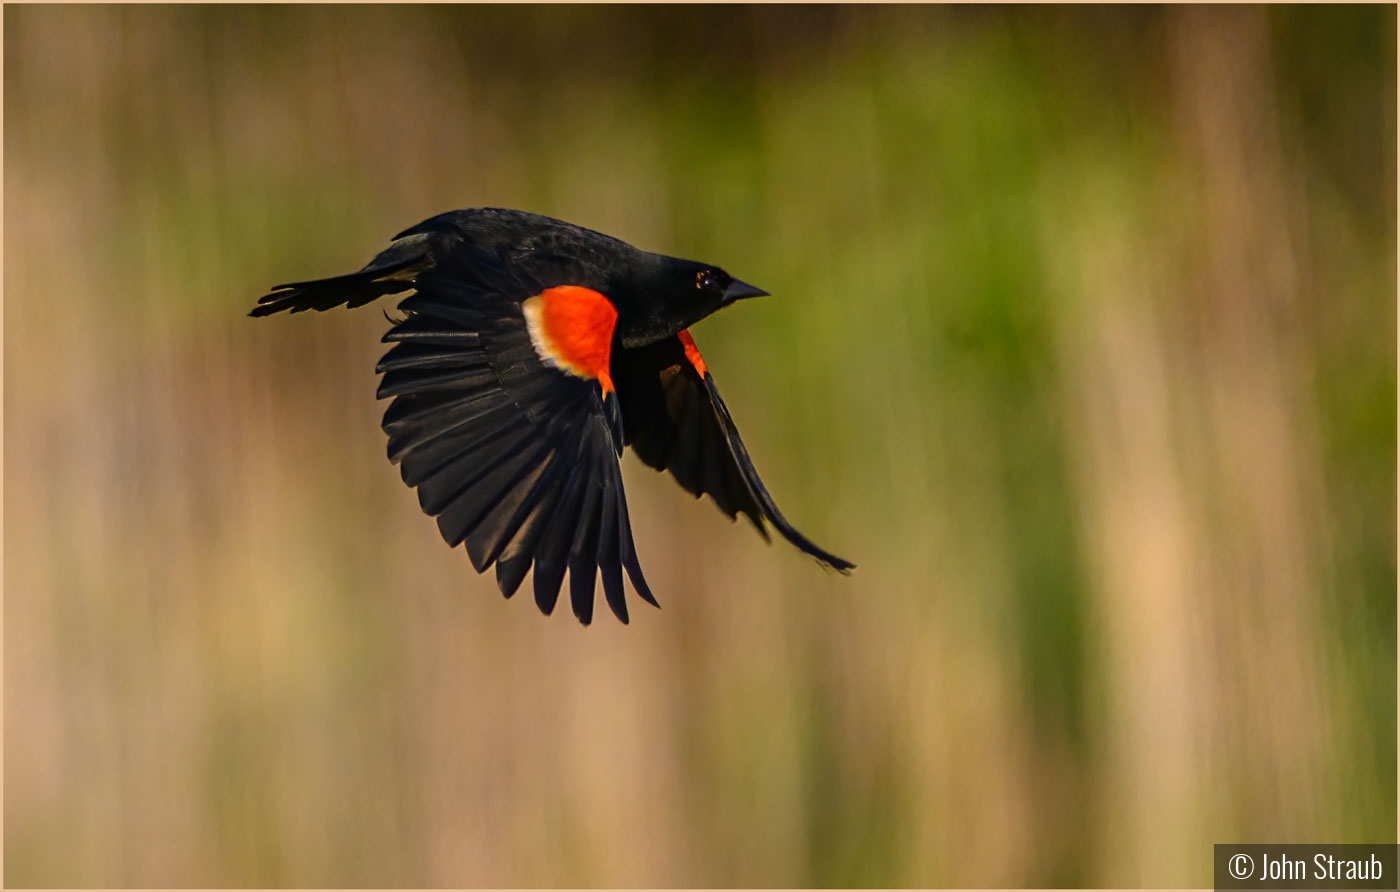 Red Wing Black Bird in Flight by John Straub